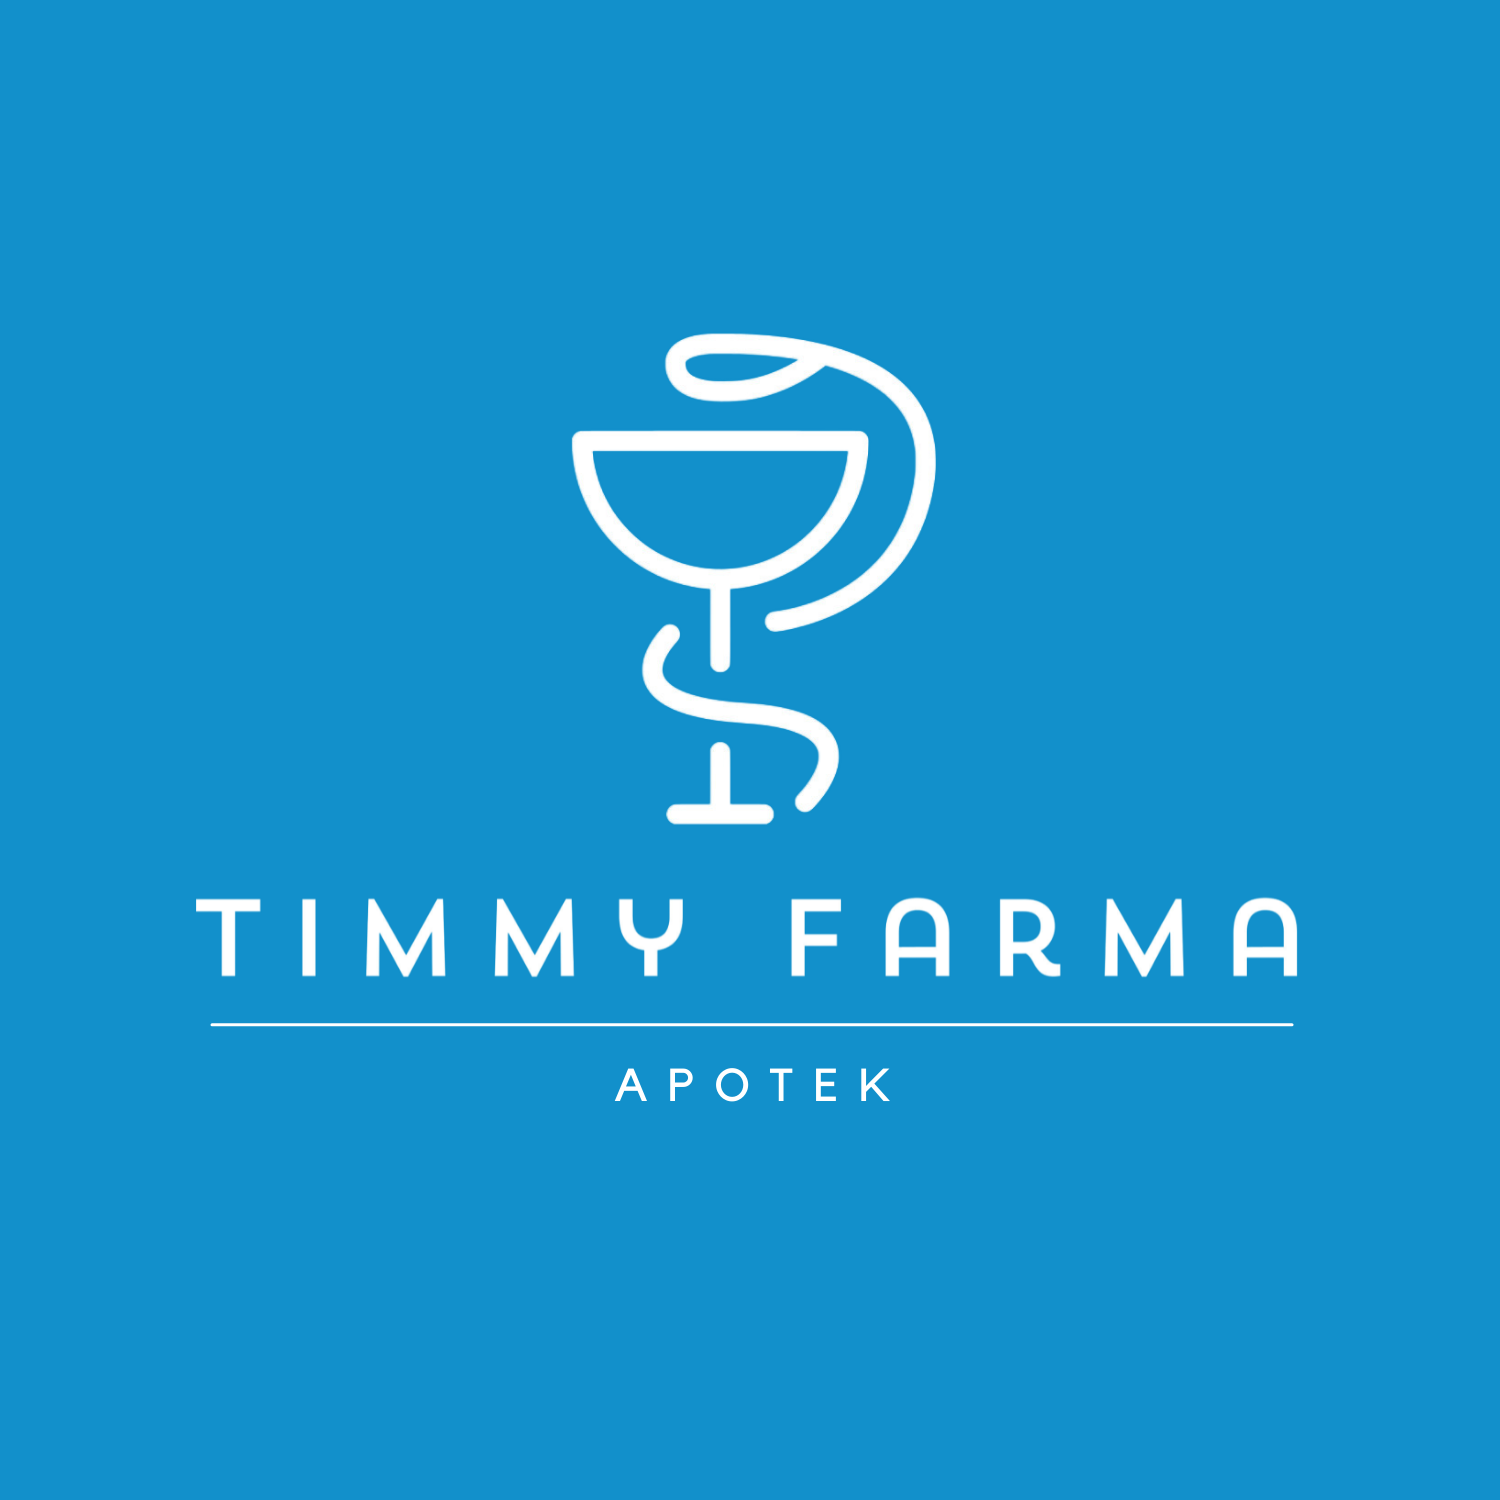 Apotek Timmy Farma